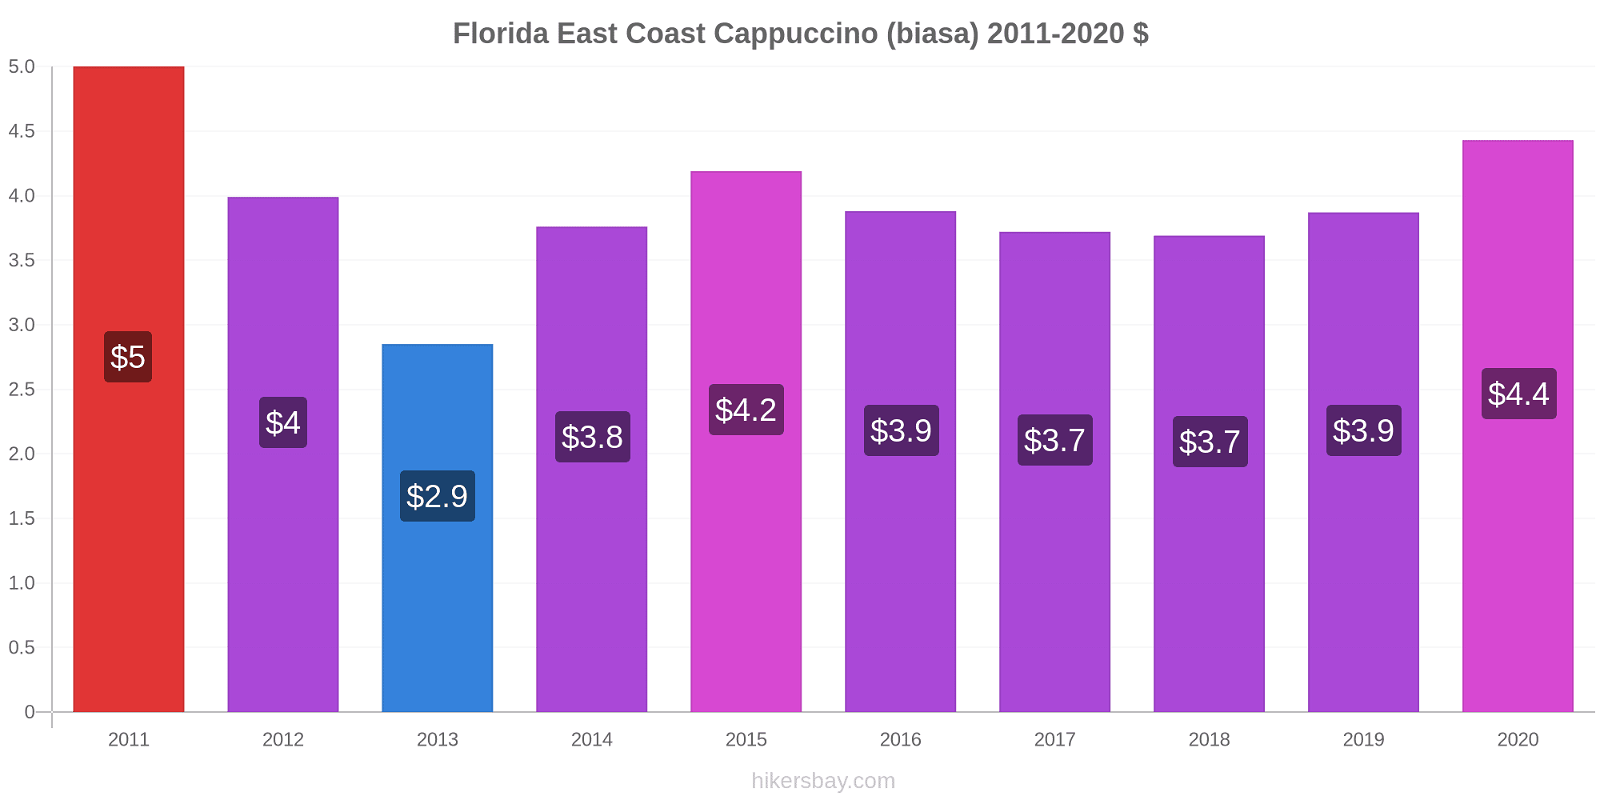 Florida East Coast perubahan harga Cappuccino (biasa) hikersbay.com